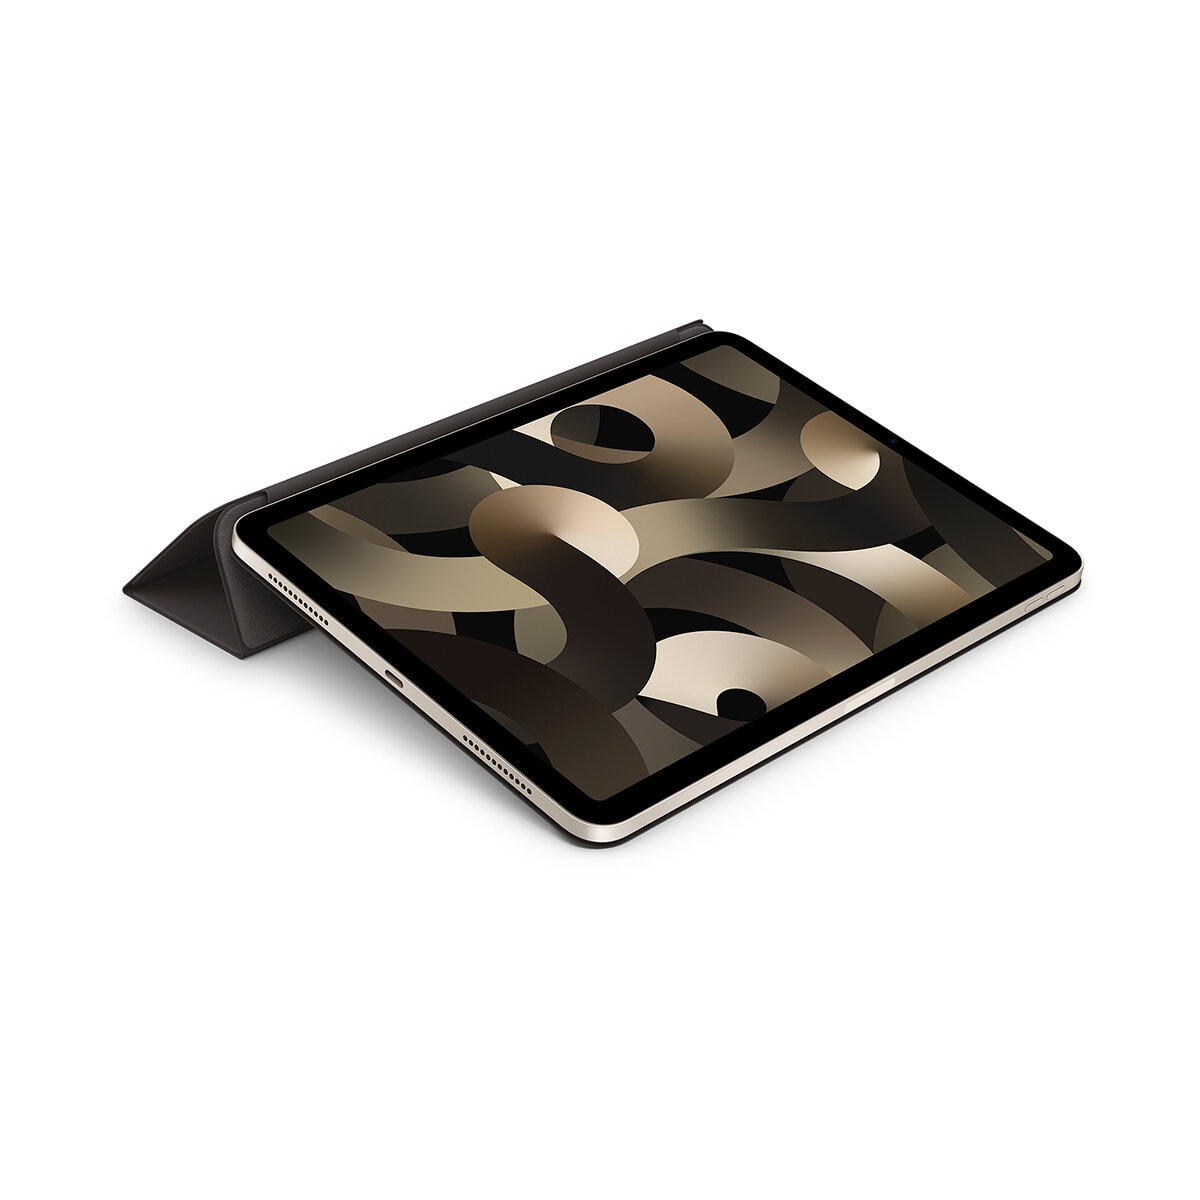 Apple Funda Smart Folio para el iPad Air (5ta Generación) Lavanda Inglesa